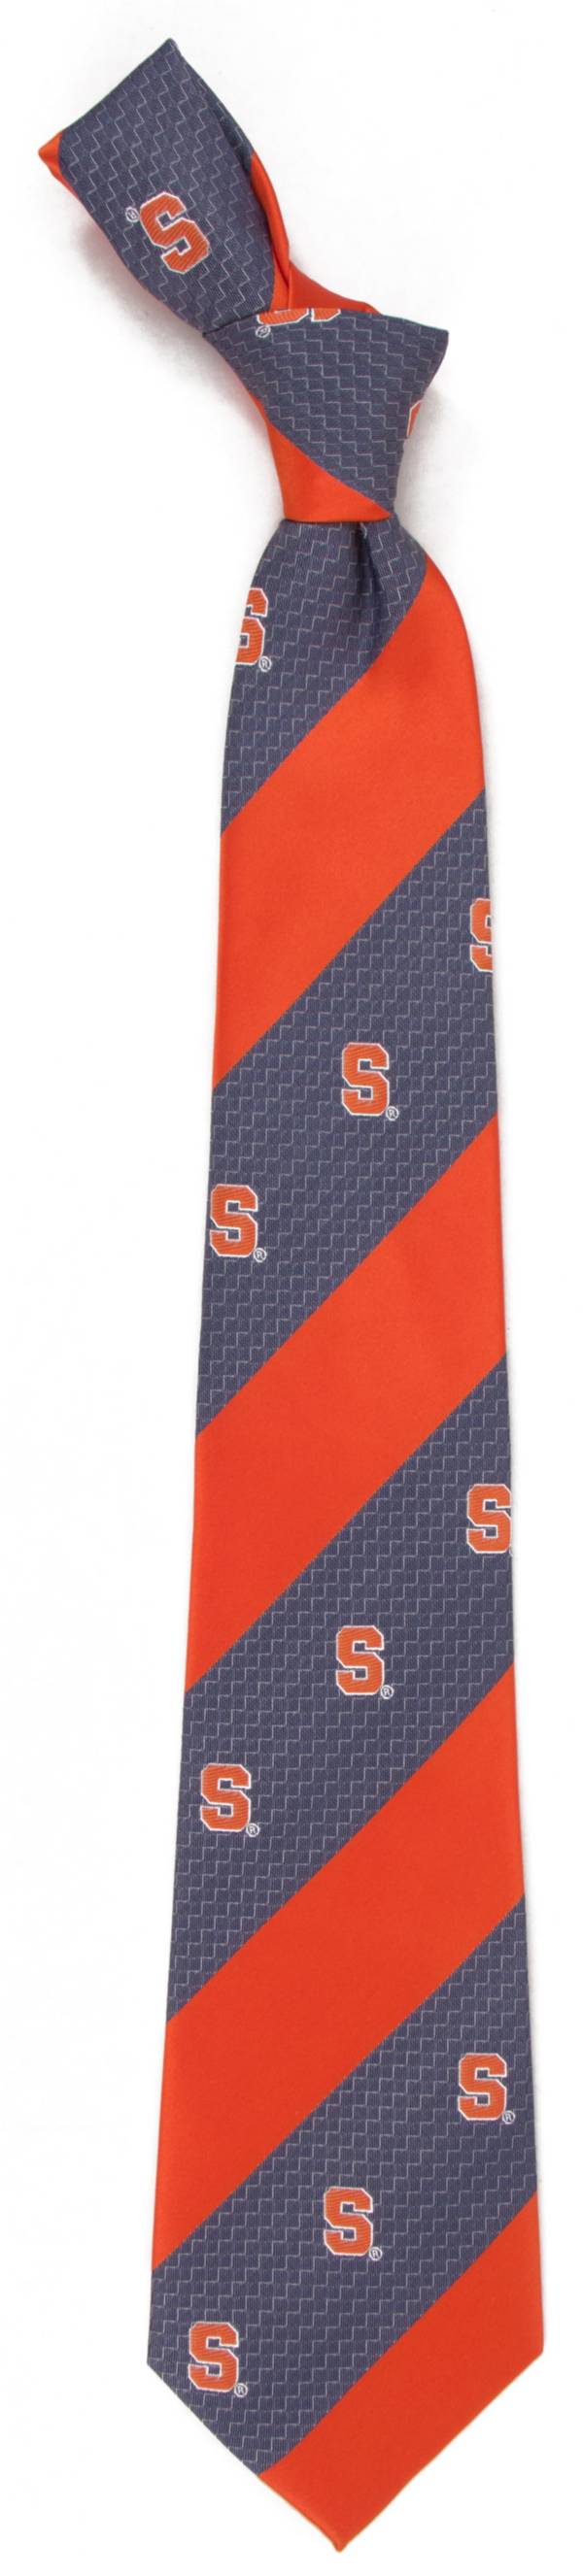 Eagles Wings Syracuse Orange Geo Stripe Necktie product image